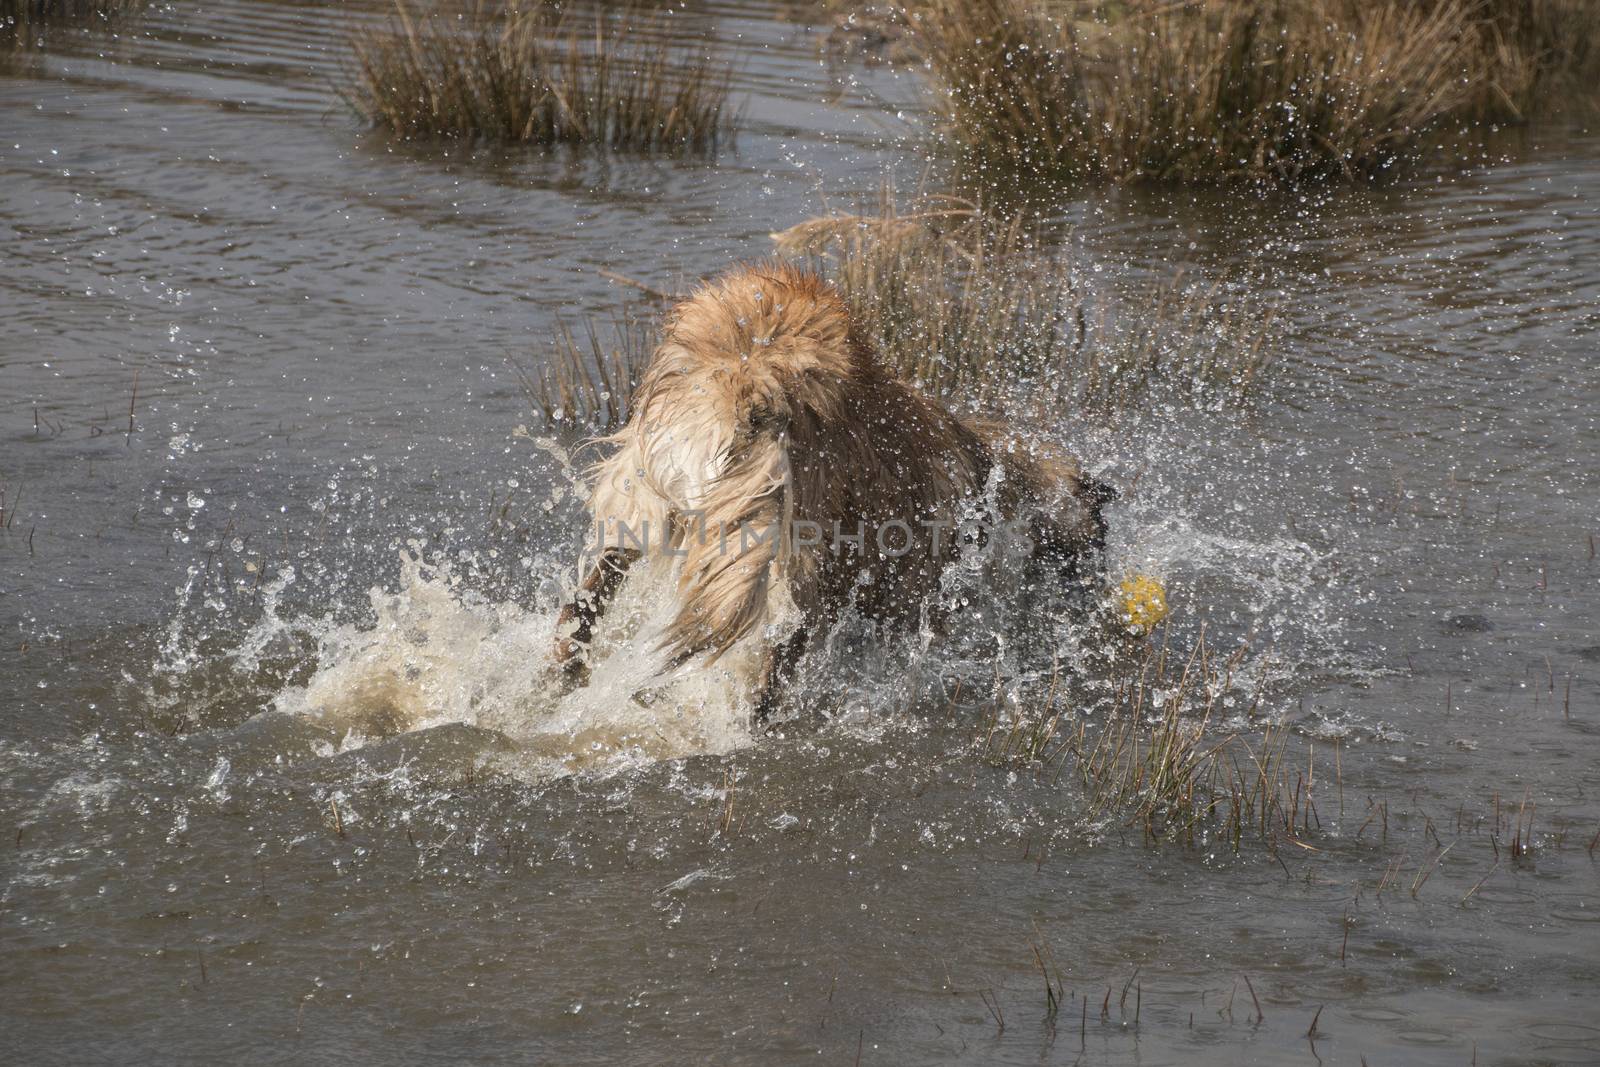 Water splash by dog jumping in by avanheertum